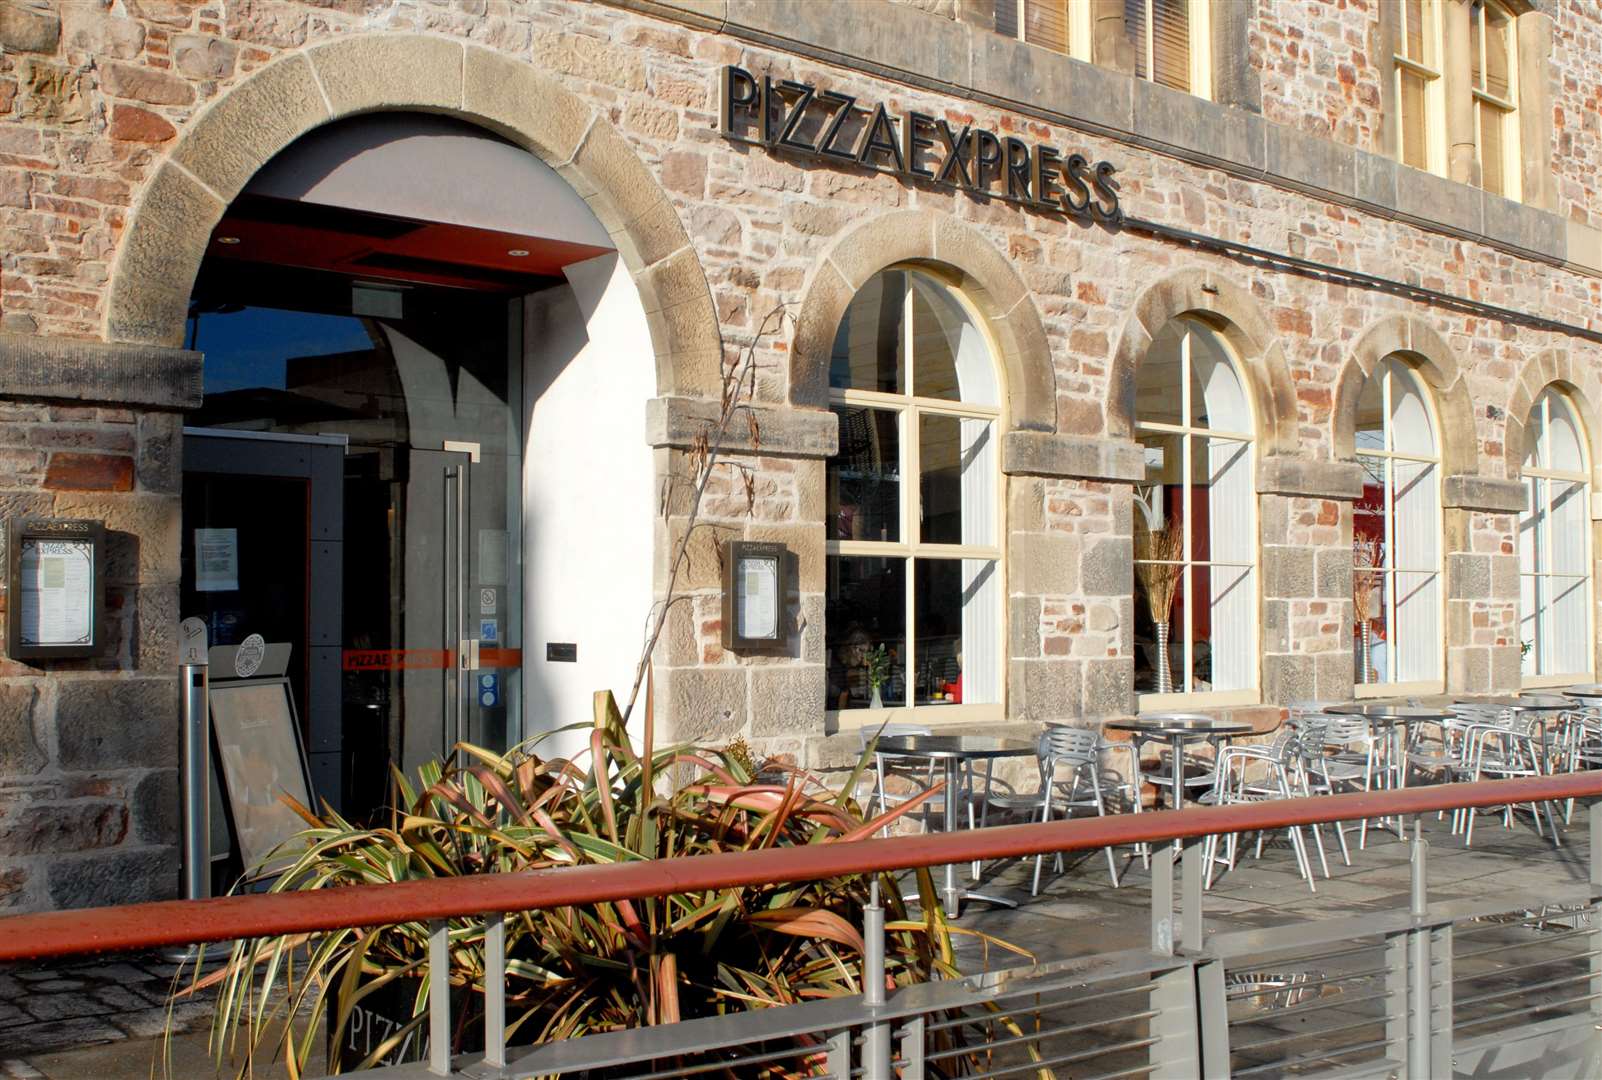 The Pizza Express restaurant in Falcon Square, Inverness.